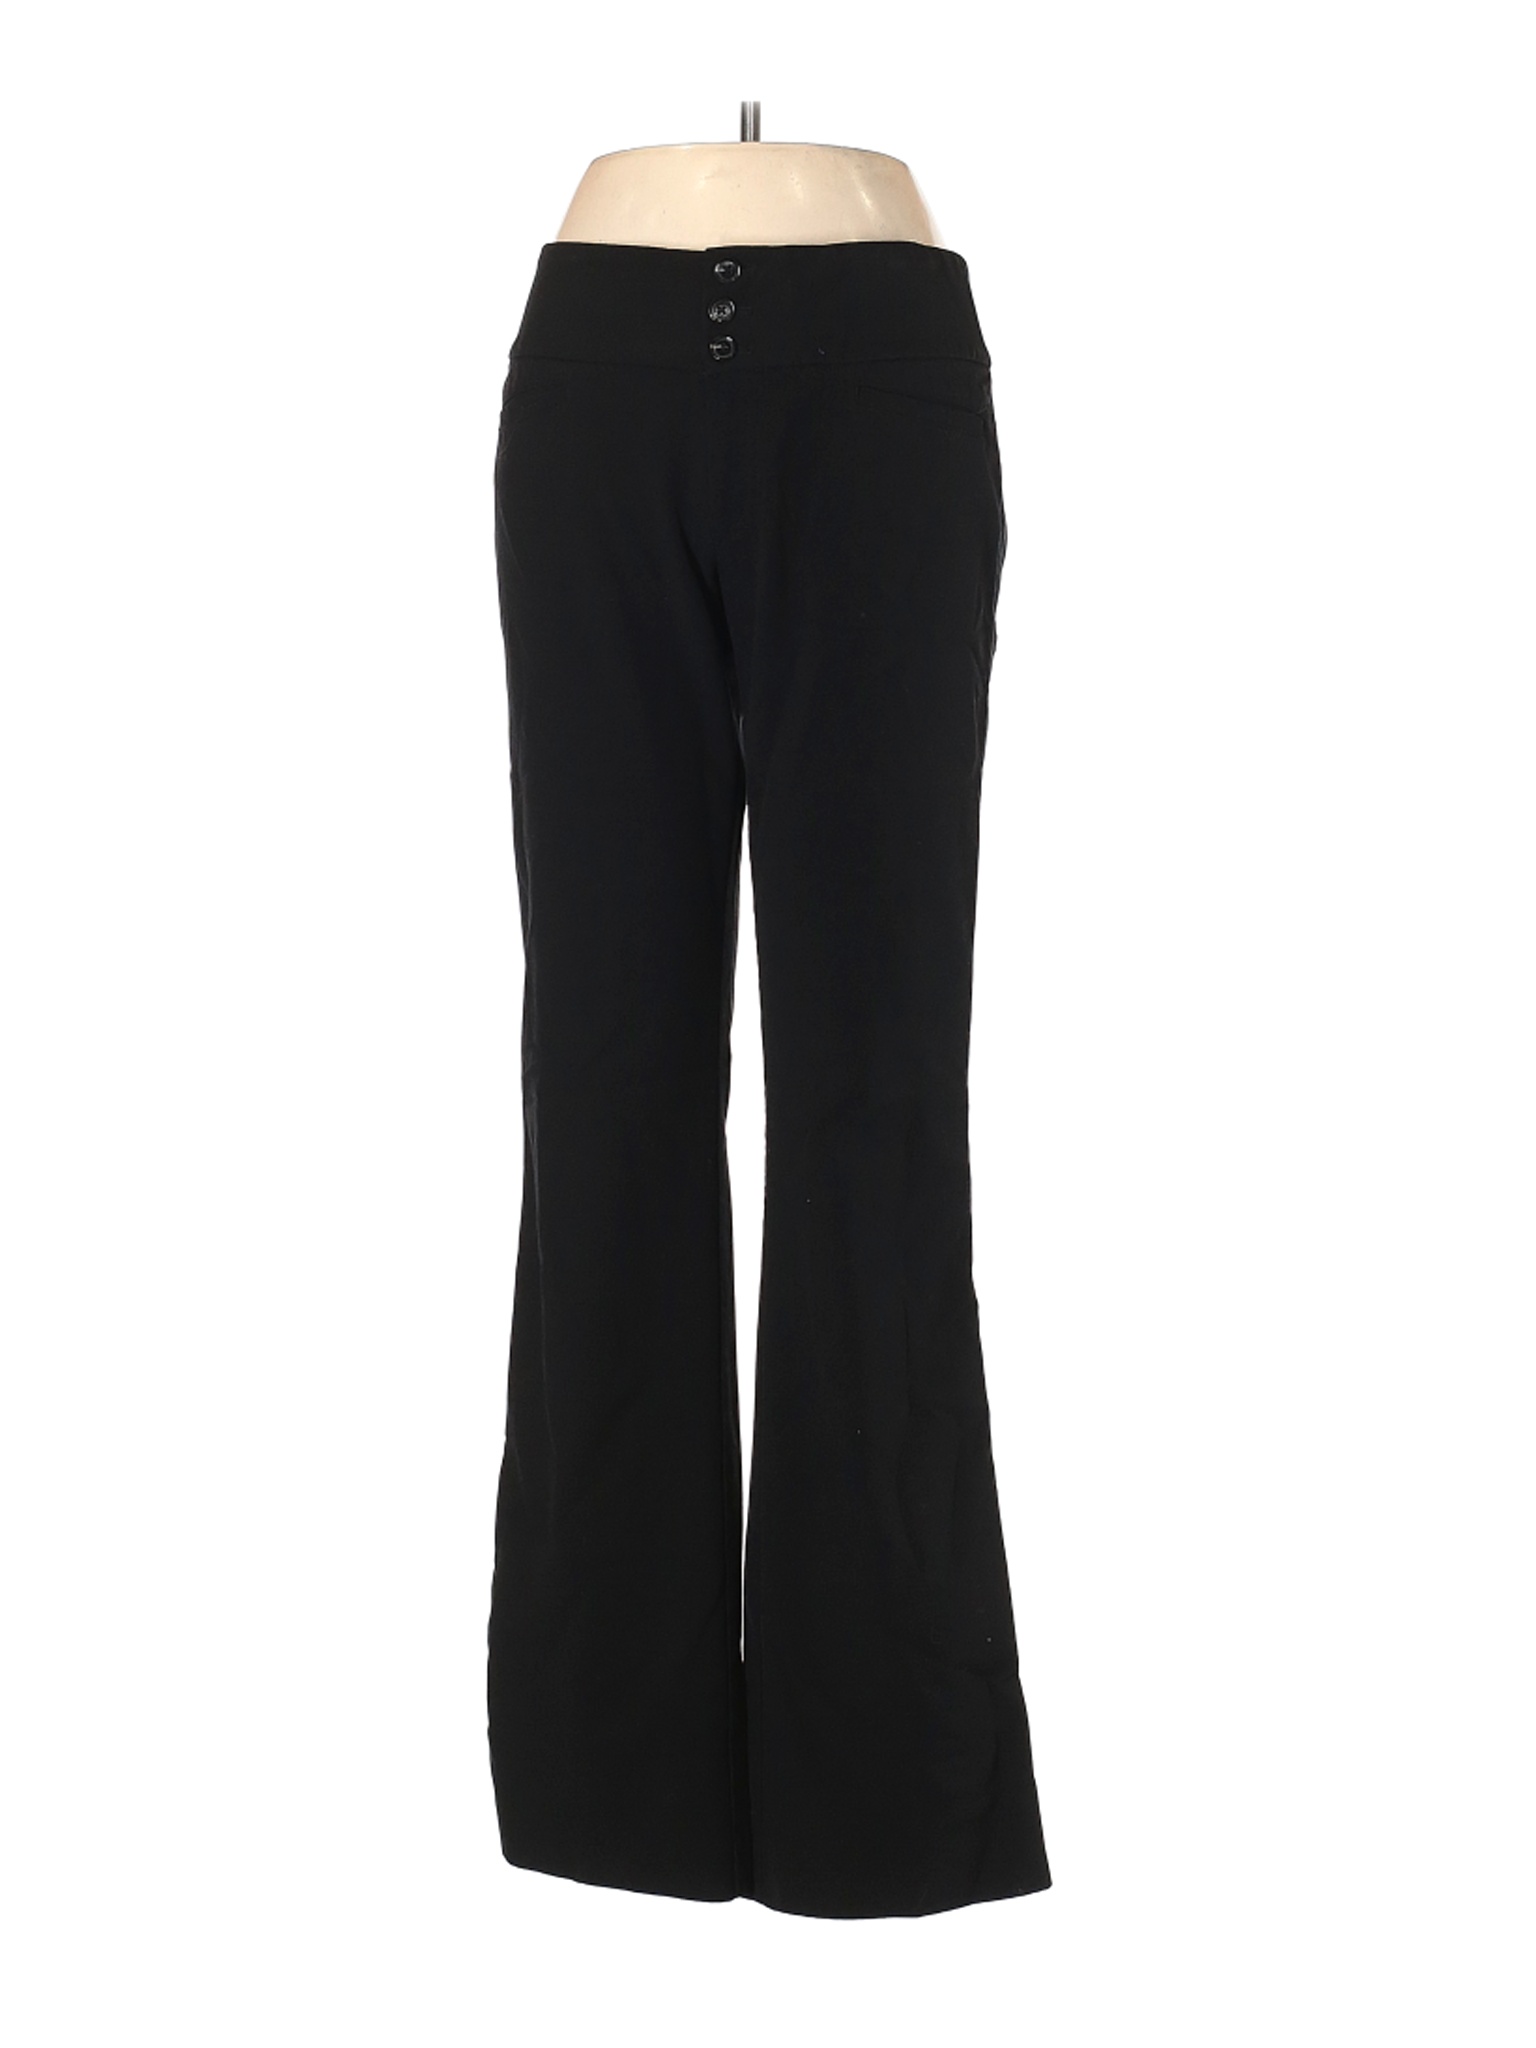 Hollywould Women Black Dress Pants 7 Tall | eBay